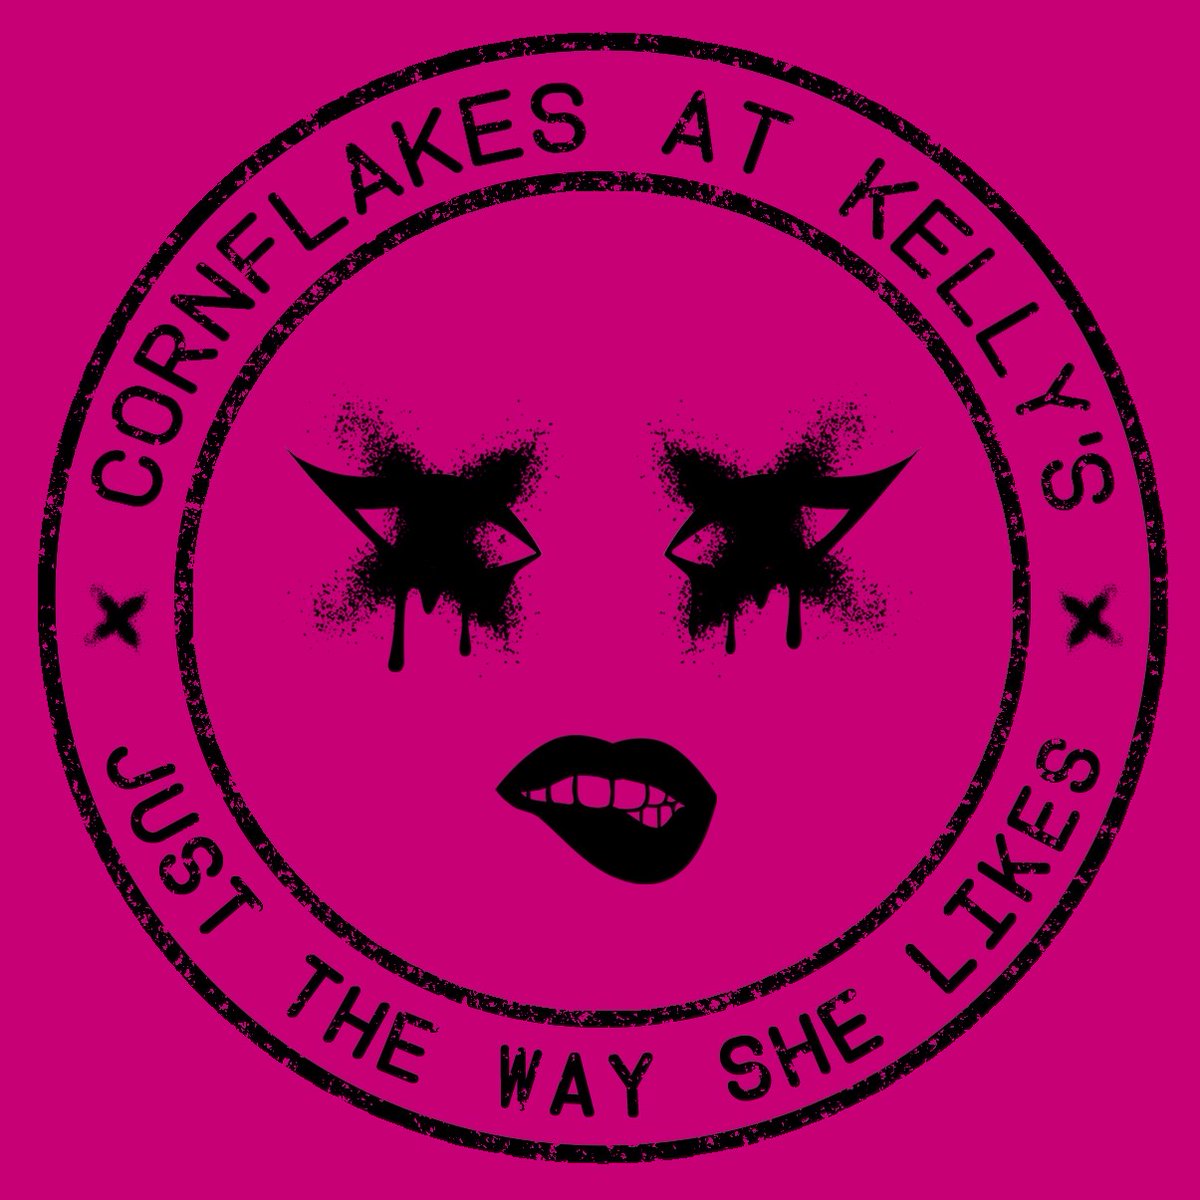 Cornflakes At Kelly’s (@CornflakesUK) on Twitter photo 2020-04-23 18:35:08 ...